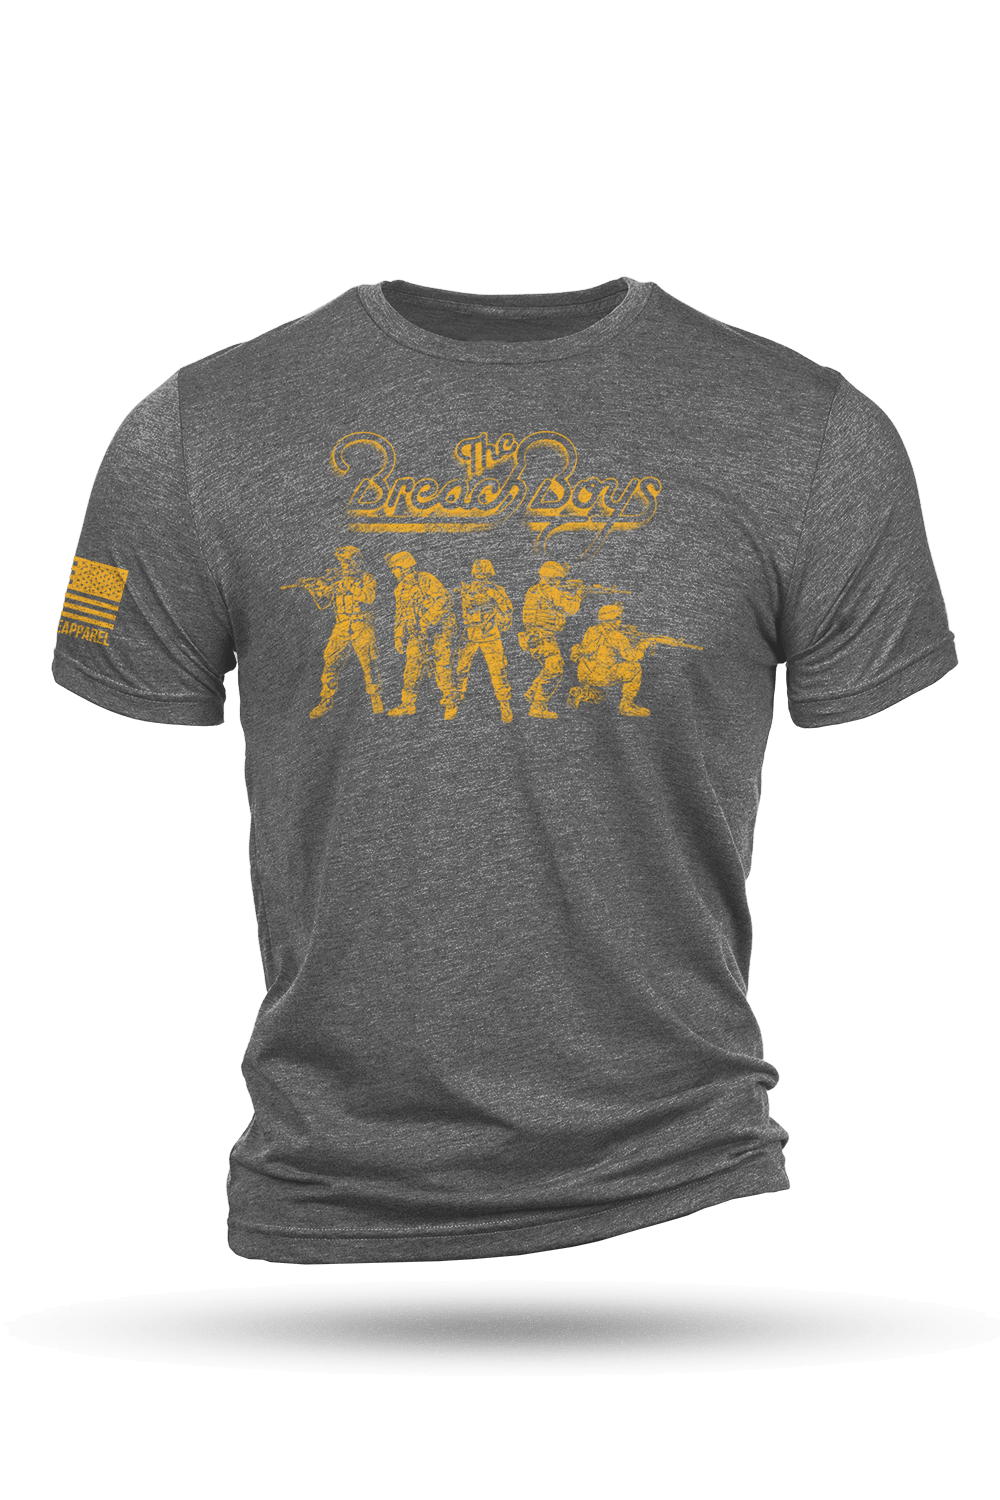 T-Shirt - The Breach Boys